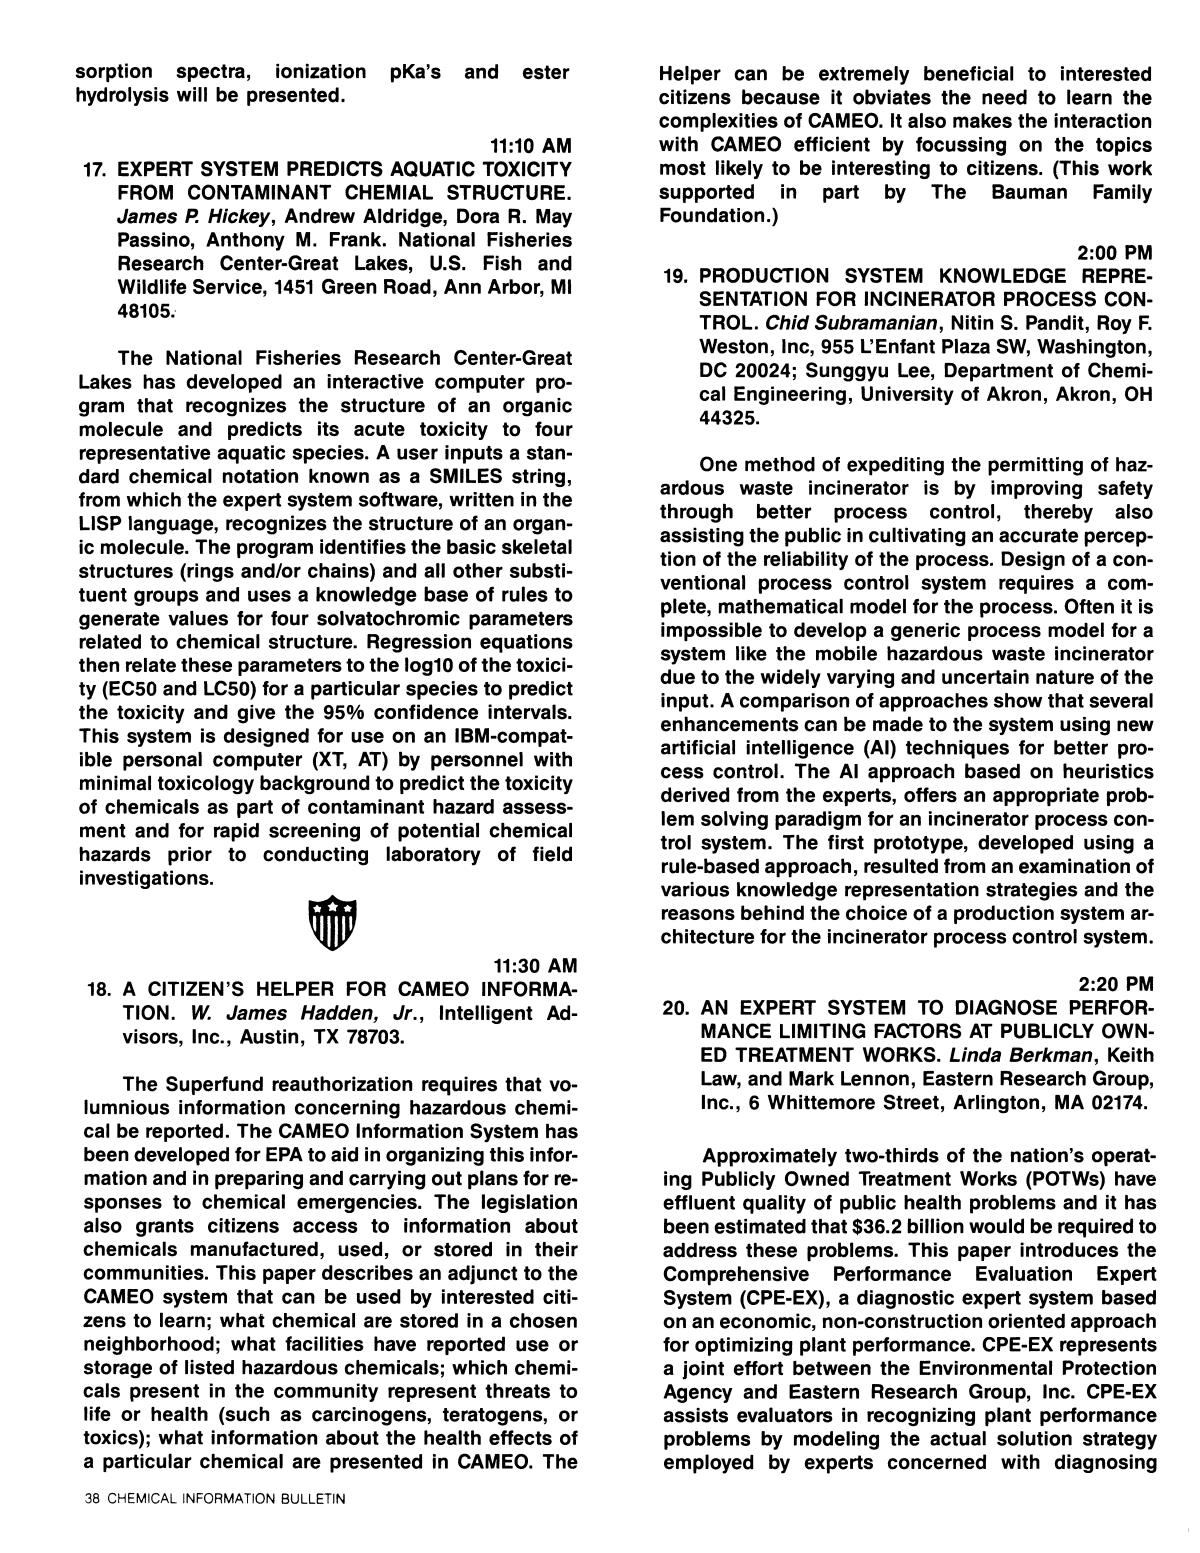 Chemical Information Bulletin, Volume 41, Number 2, Summer 1989
                                                
                                                    38
                                                